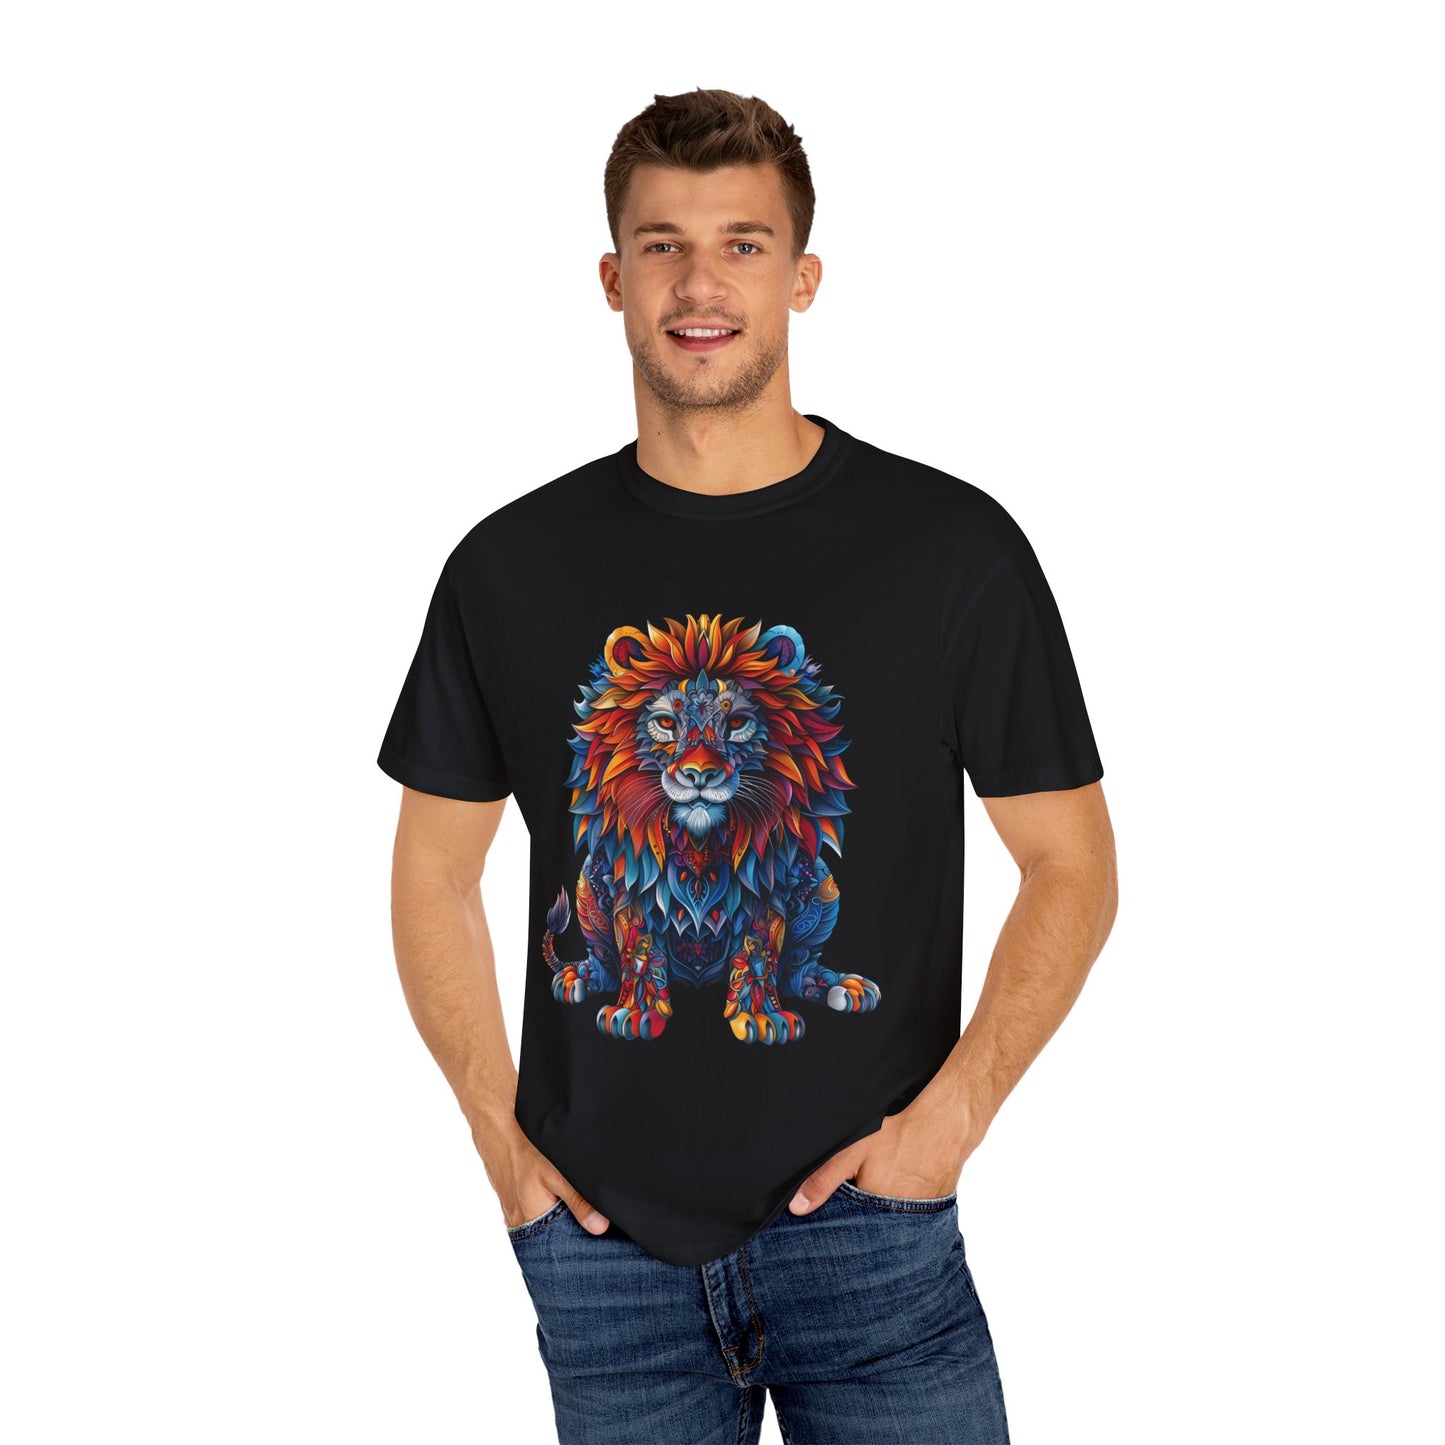 Lion Head Cool Graphic Design Novelty Unisex Garment-dyed T-shirt Cotton Funny Humorous Graphic Soft Premium Unisex Men Women Black T-shirt Birthday Gift-18